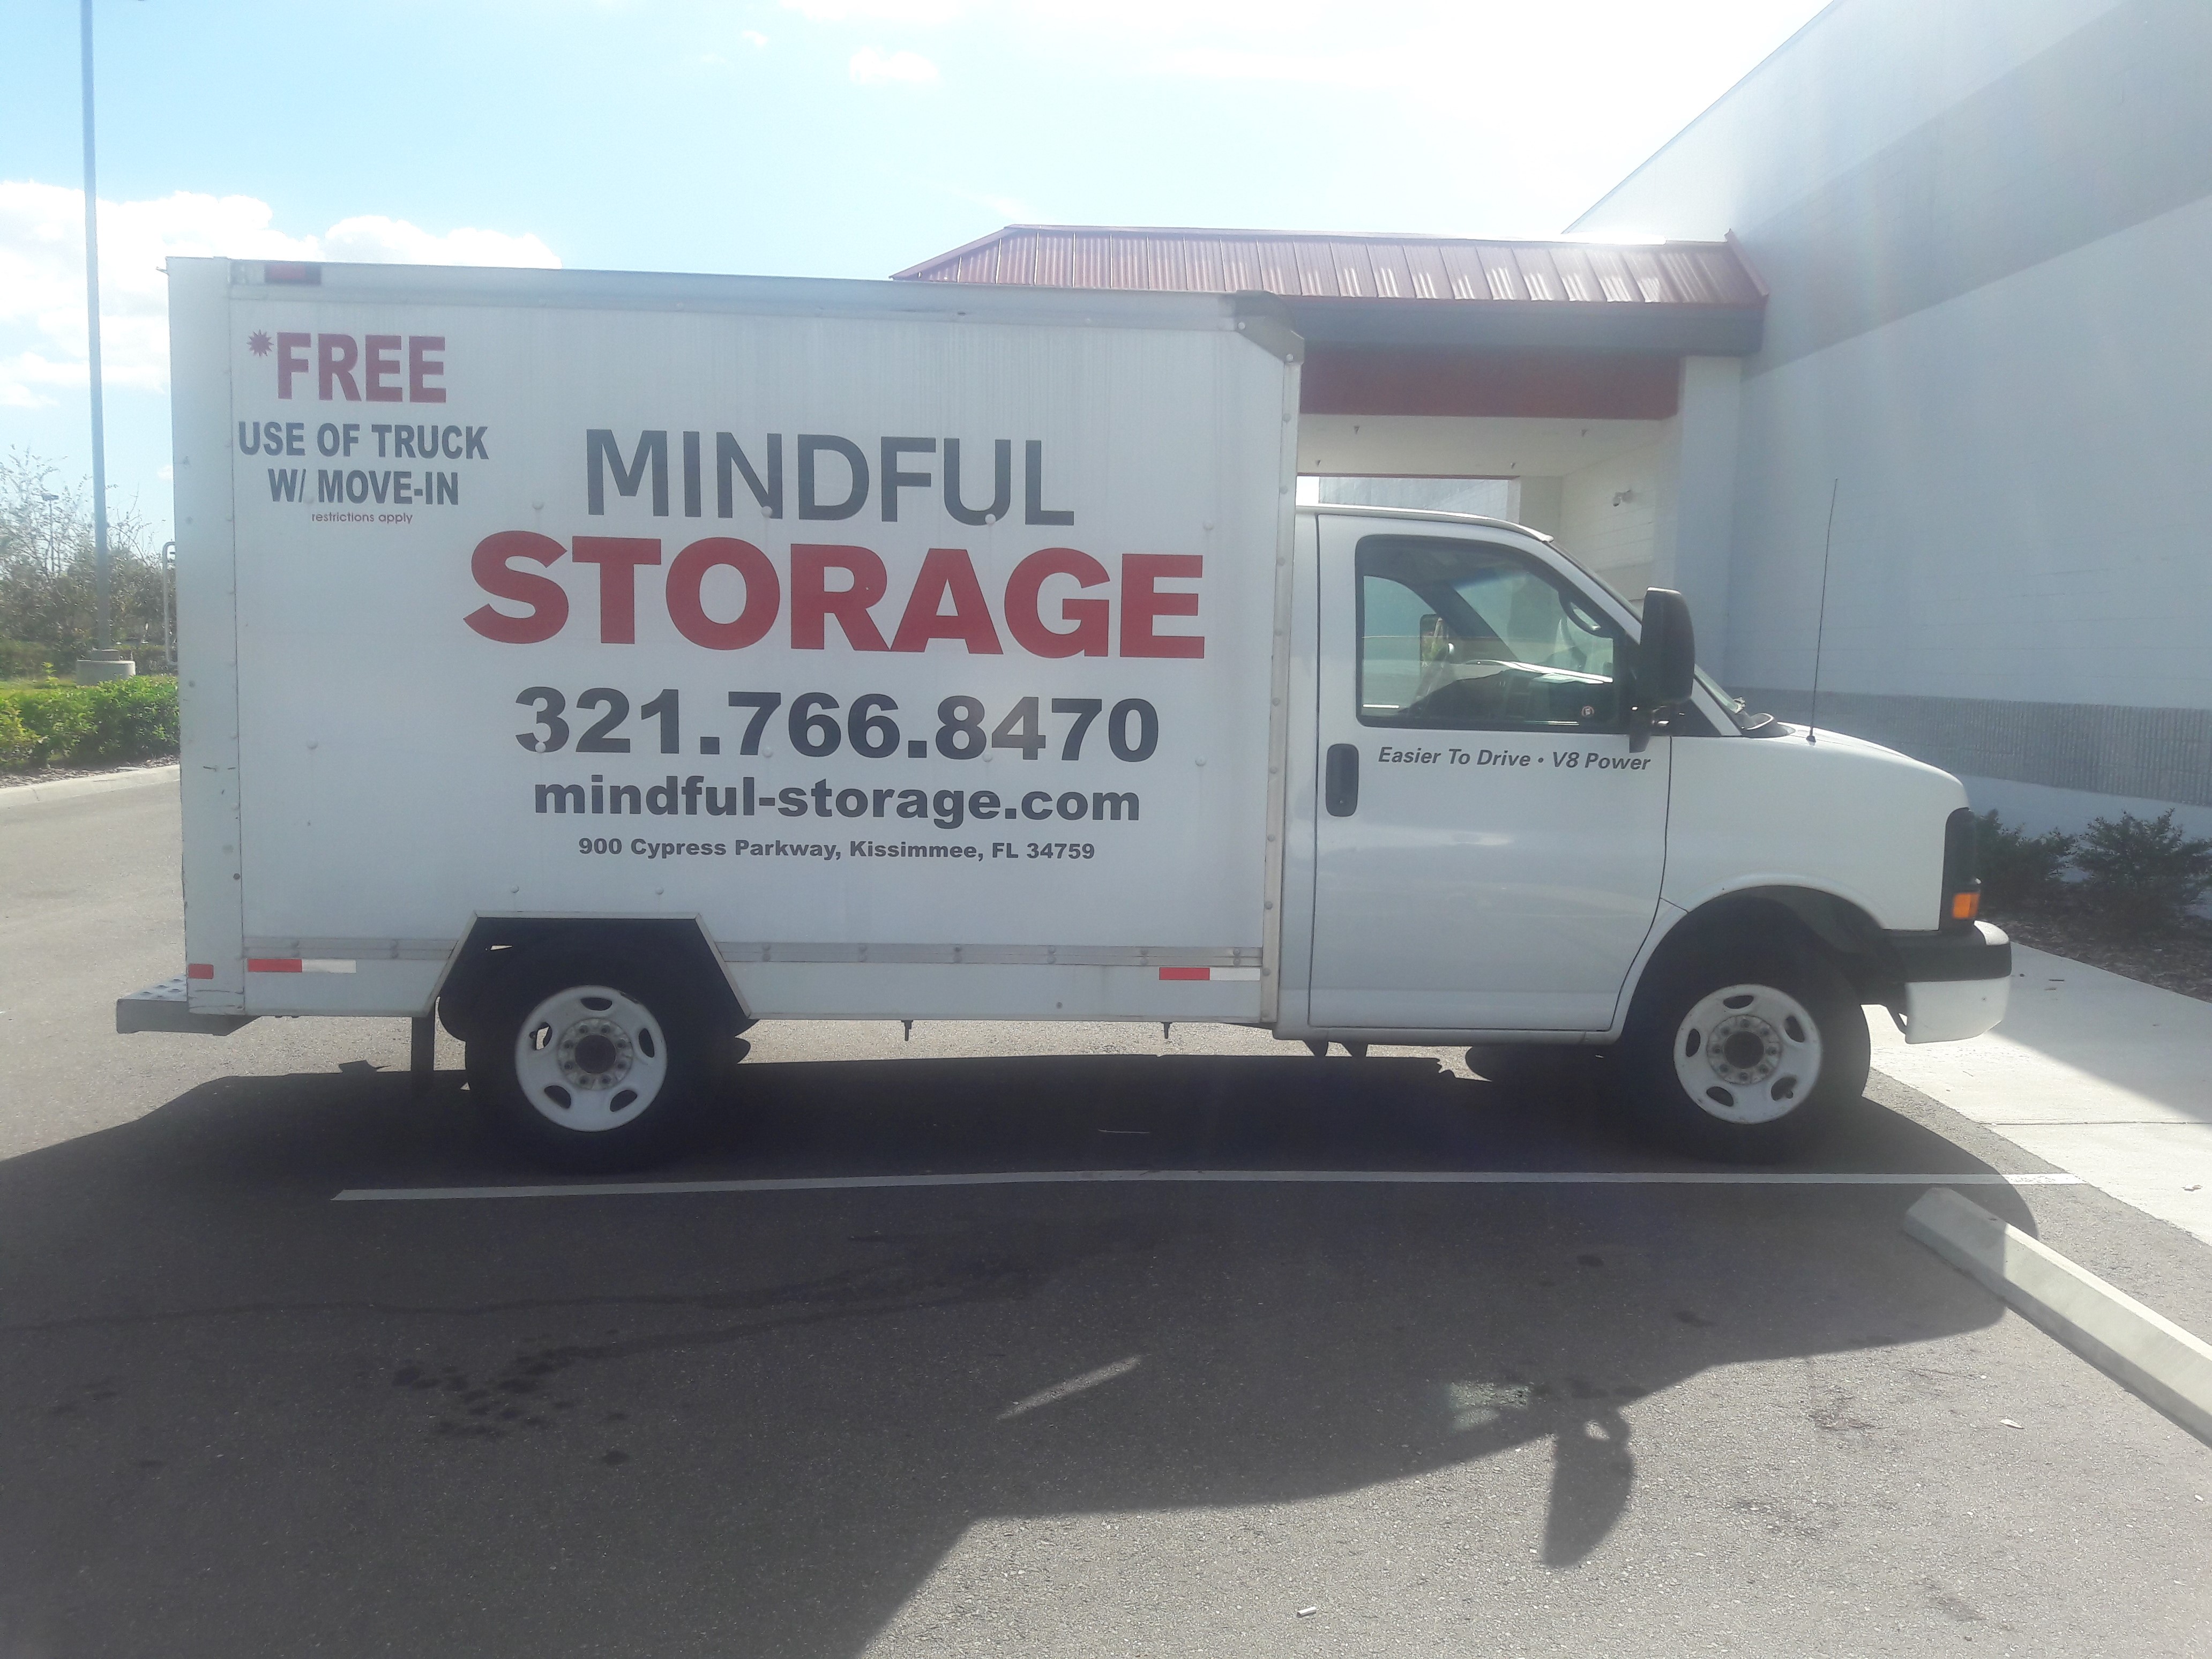 Mindful Storage Free Truck Rental